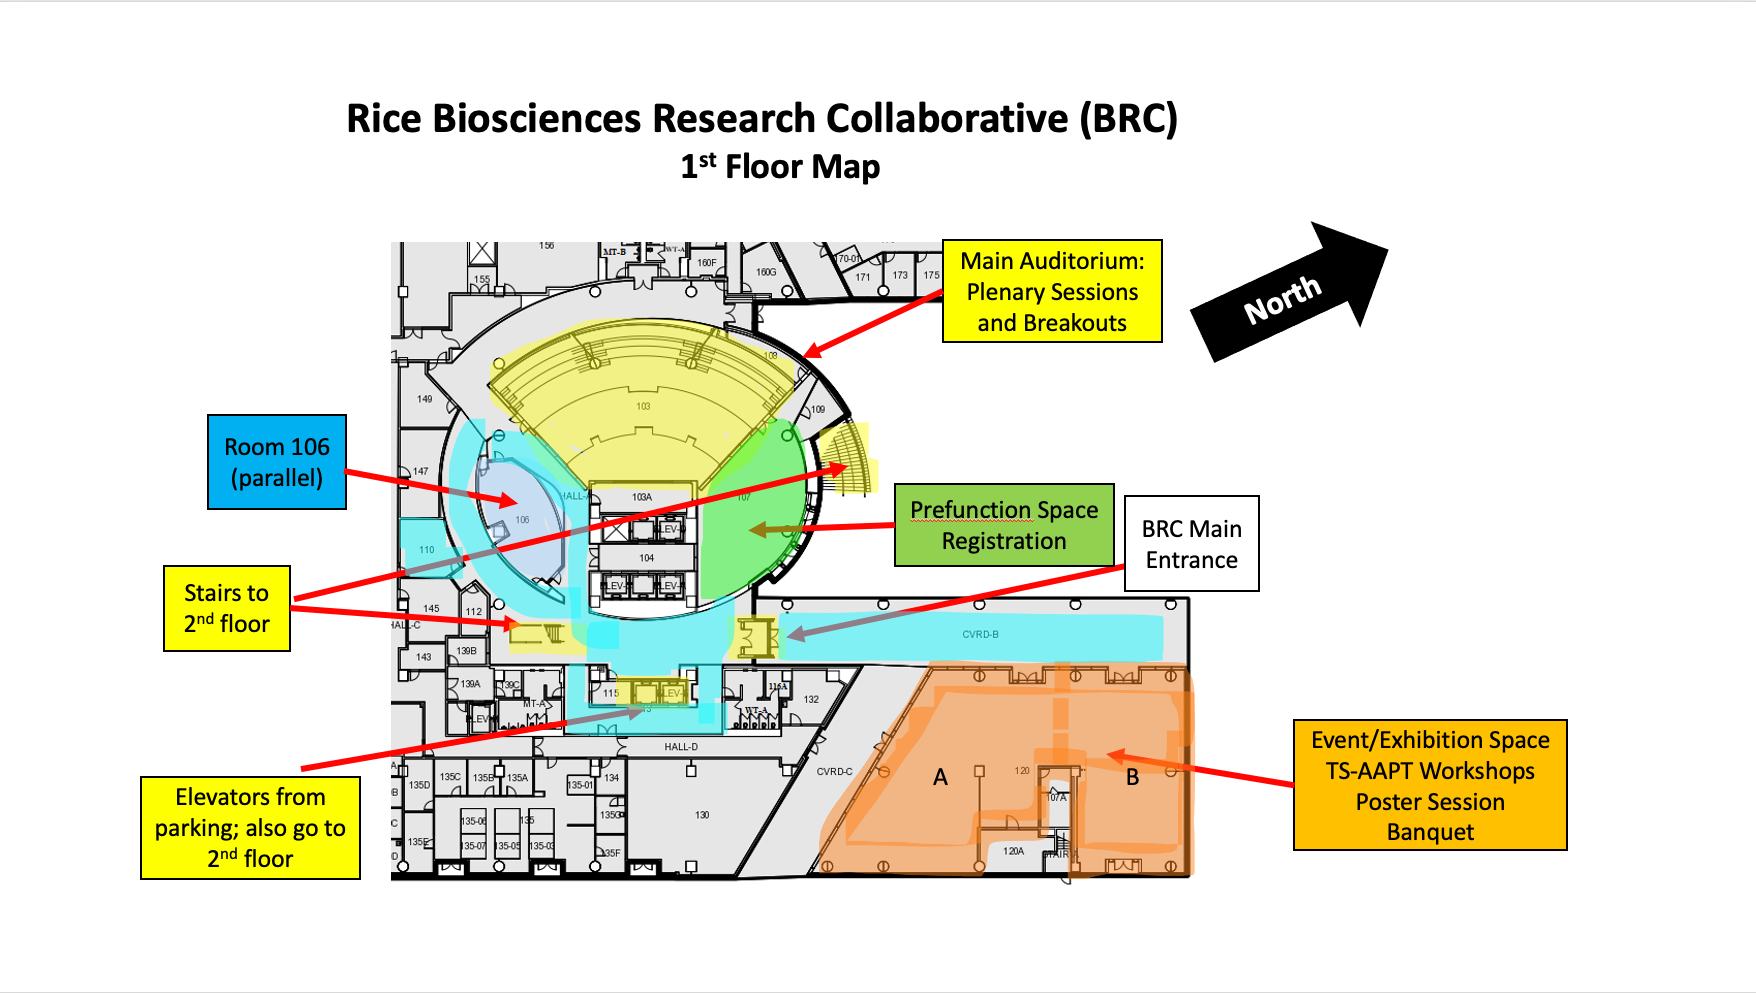 Rice BioSciences Research Collaborative - 1st Floor Map